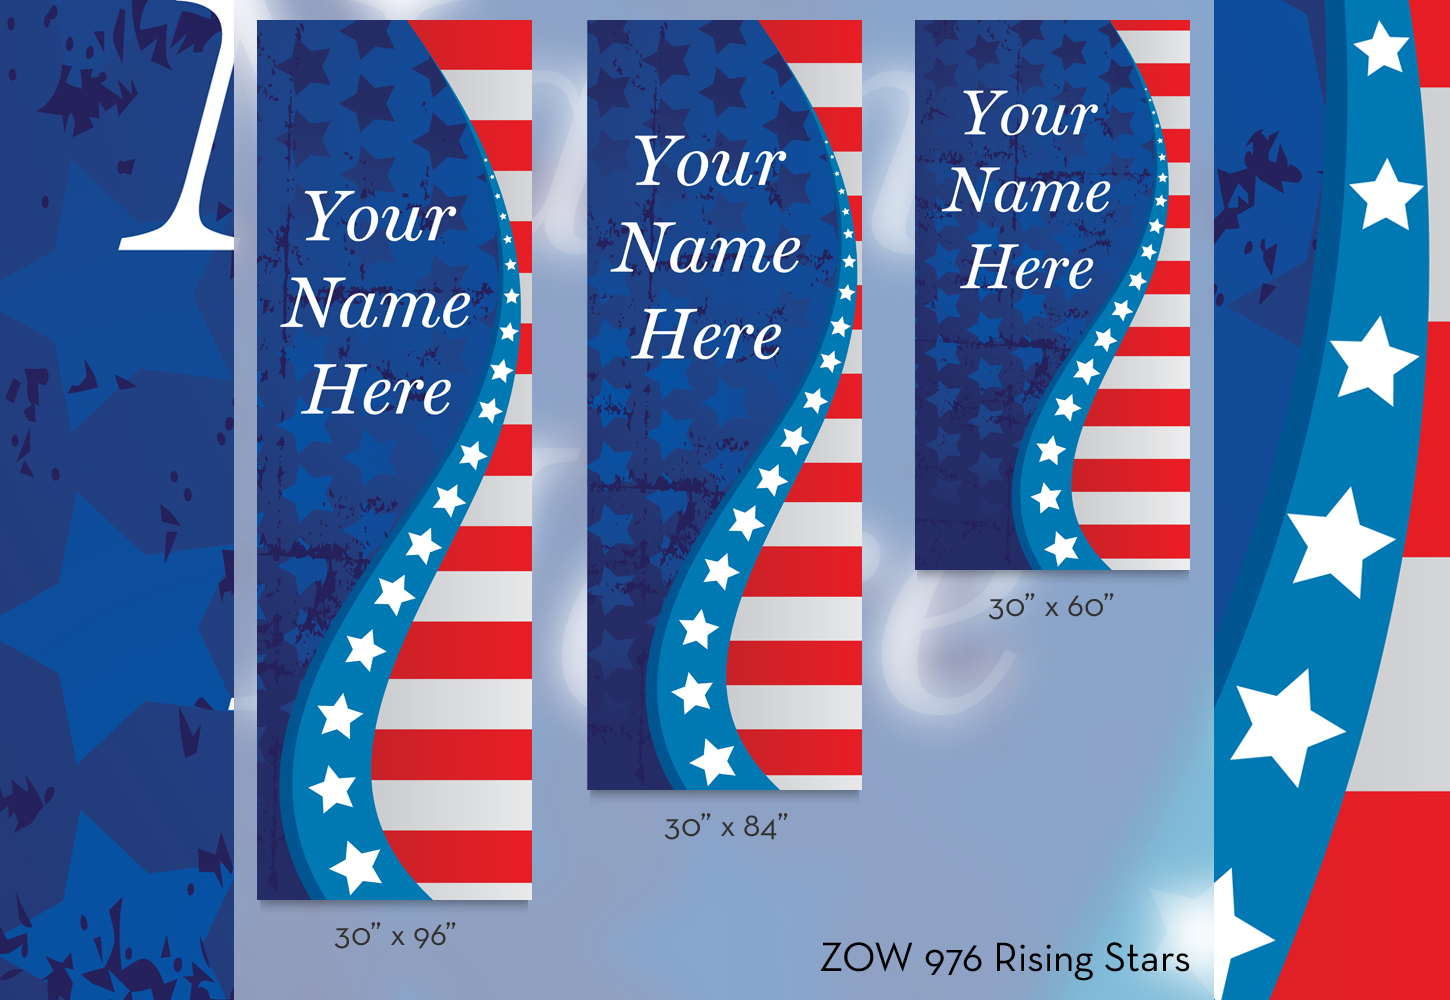 ZOW 976 Rising Stars